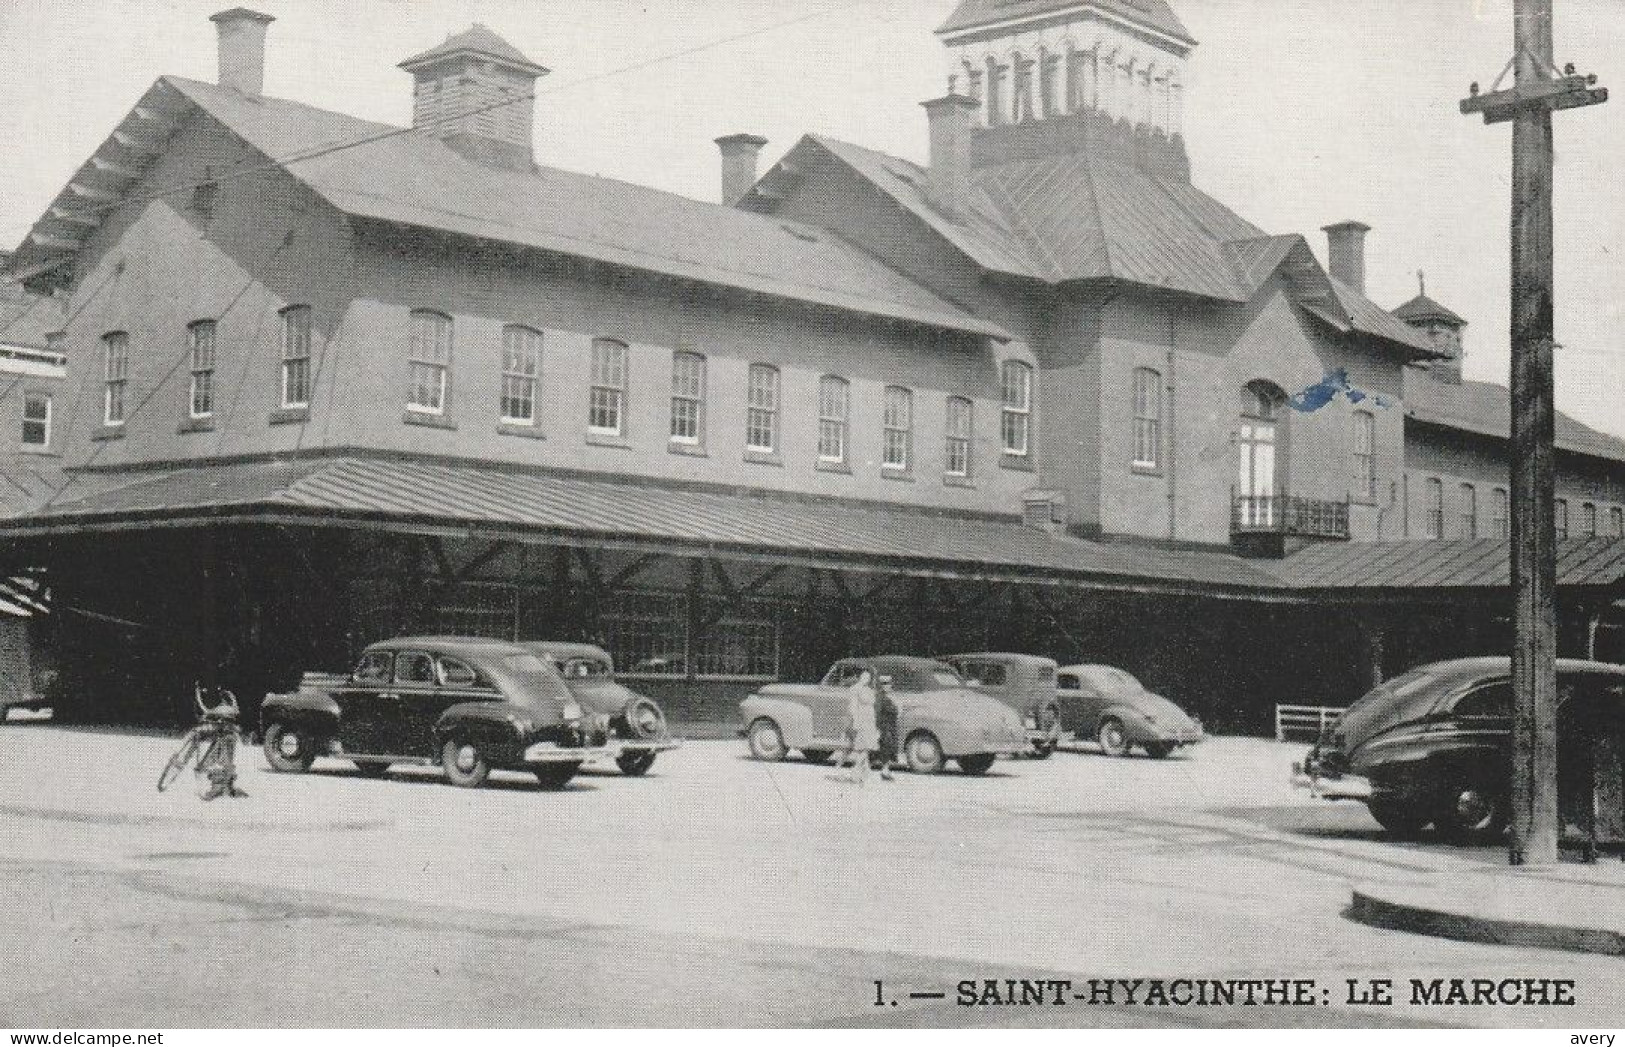 Sainte-Hyacinthe: Le Marche - St. Hyacinthe